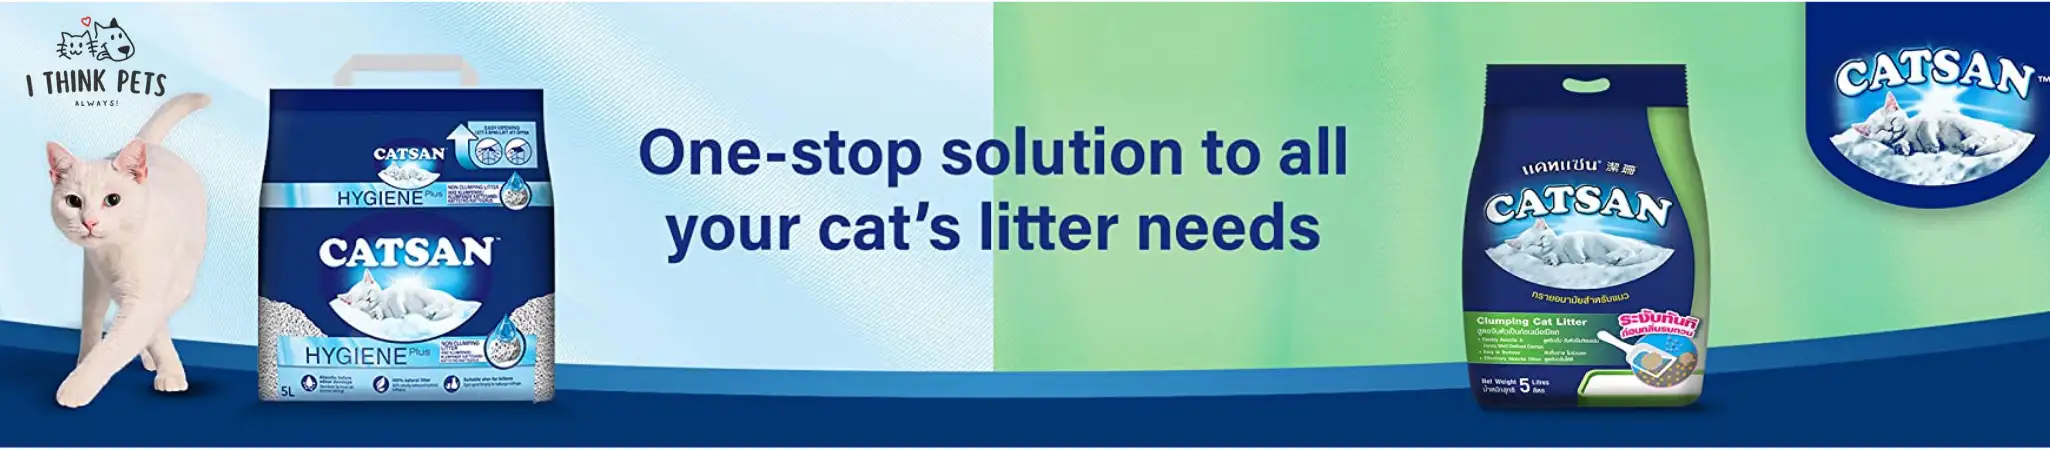 Catsan Cat Litter at ithinkpets.com